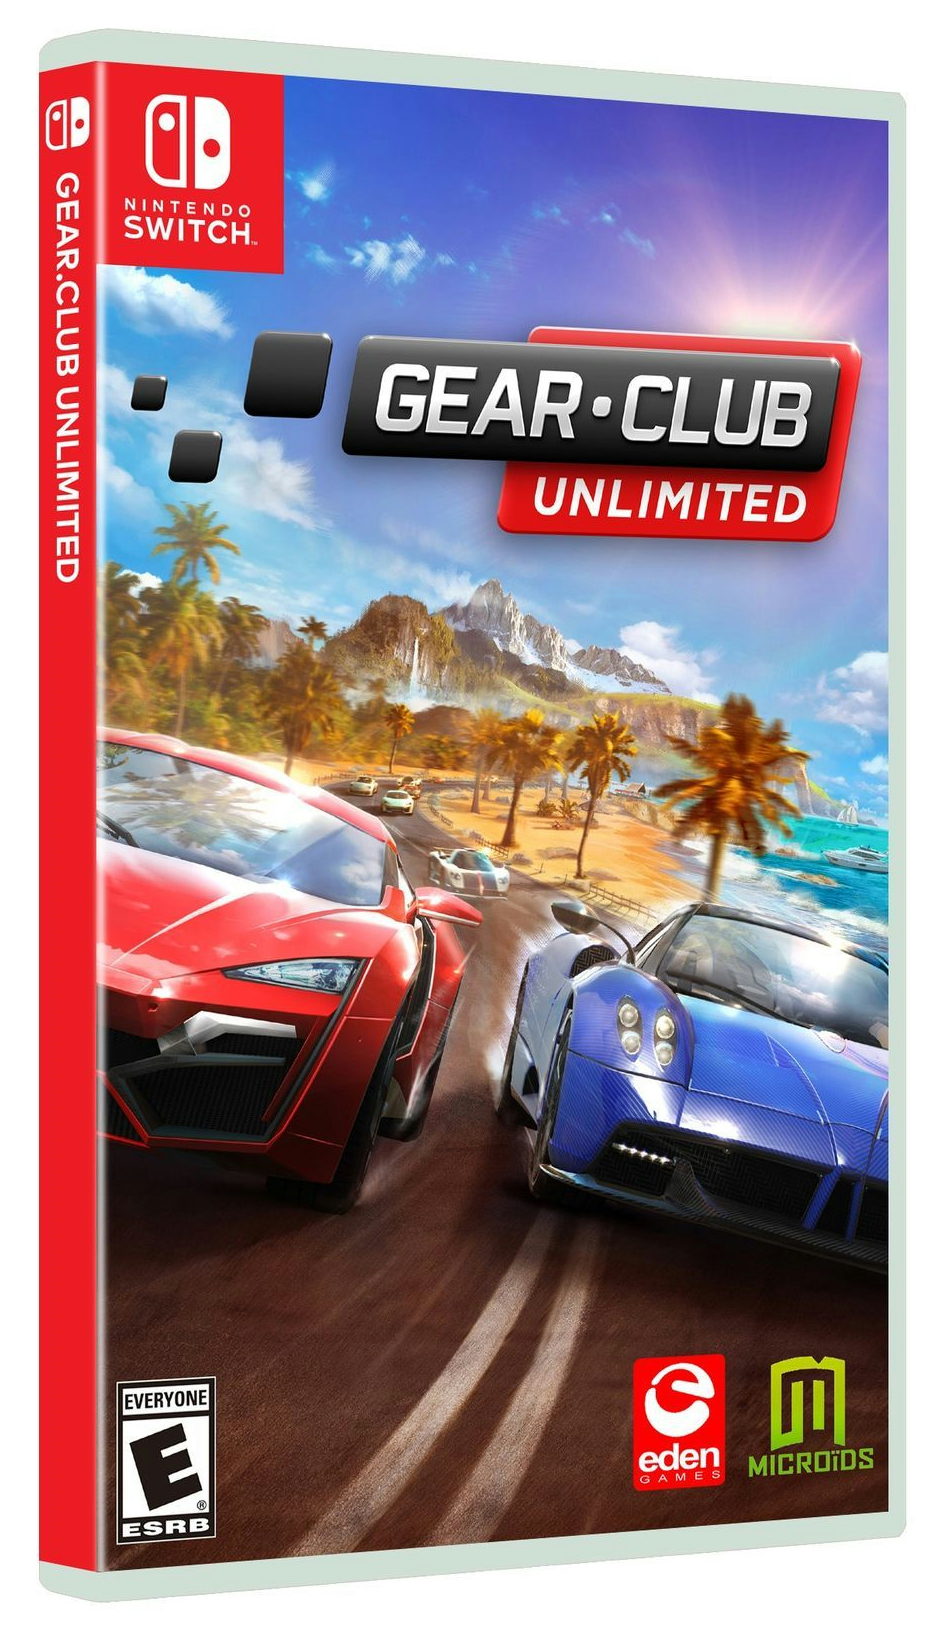 3dレースゲーム Gear Club Unlimited の国内パッケージが公開 予約も開始